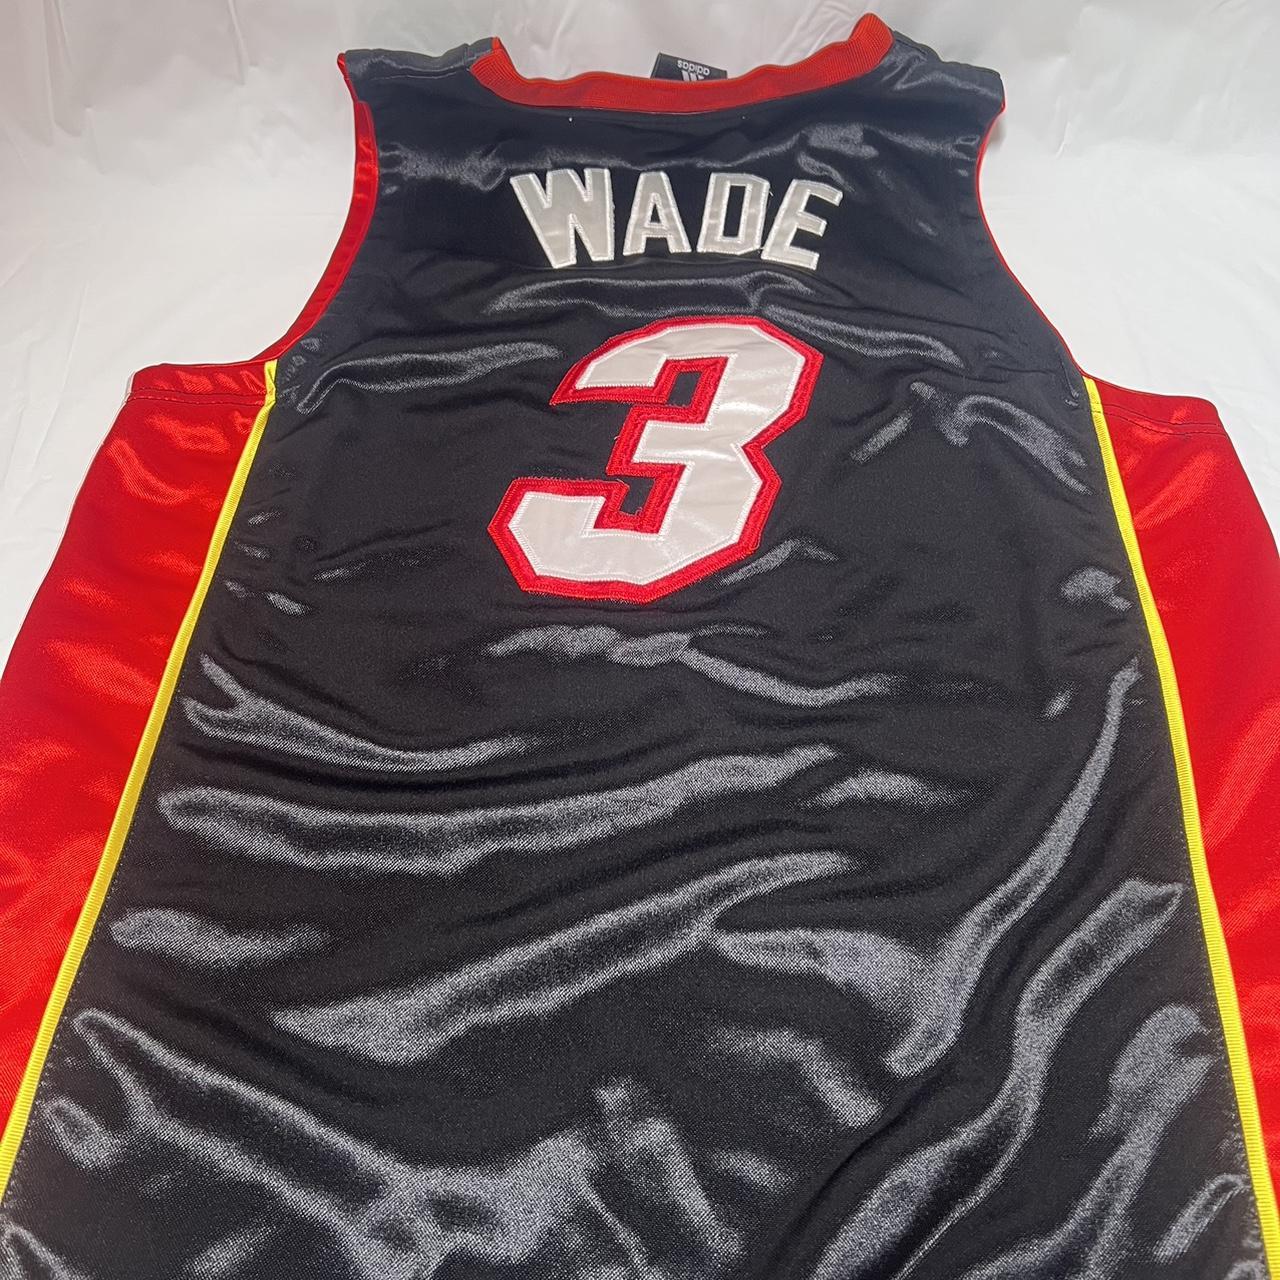 Miami Heat Dwayne Wade Adidas Basketball Jersey Black & Red 